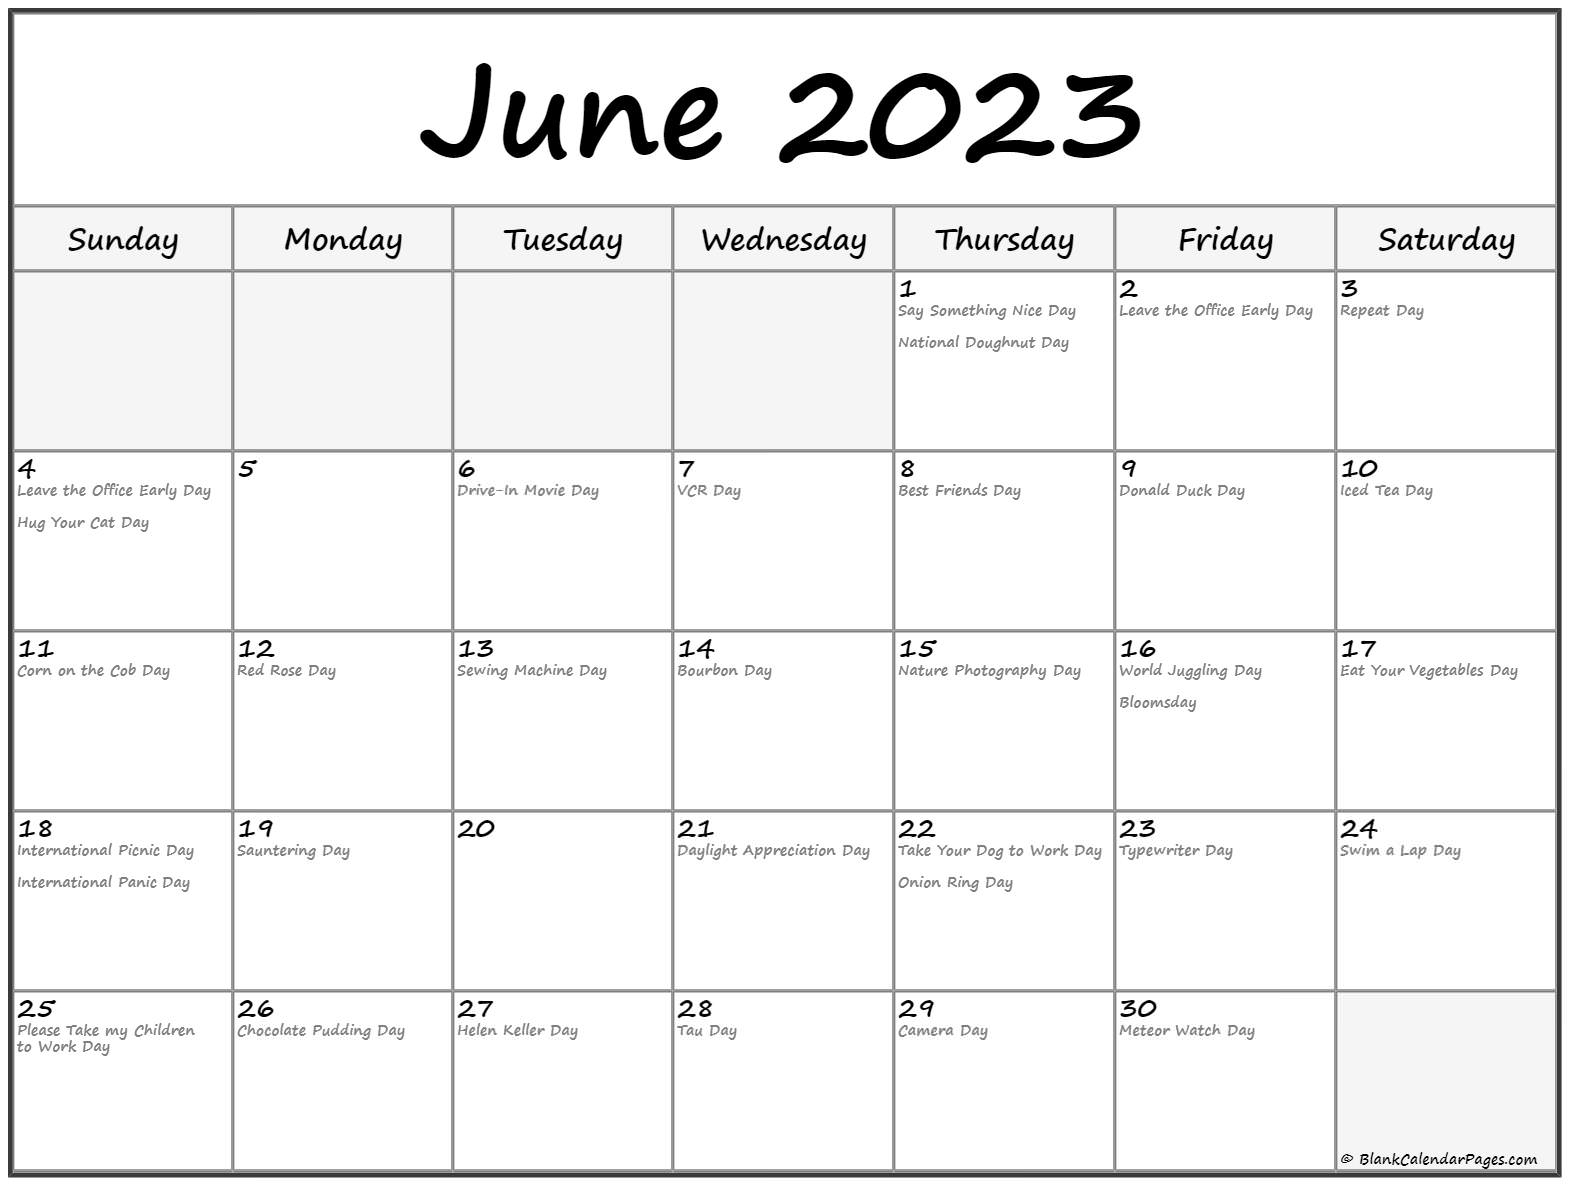 June 2023 Calendar With Holidays